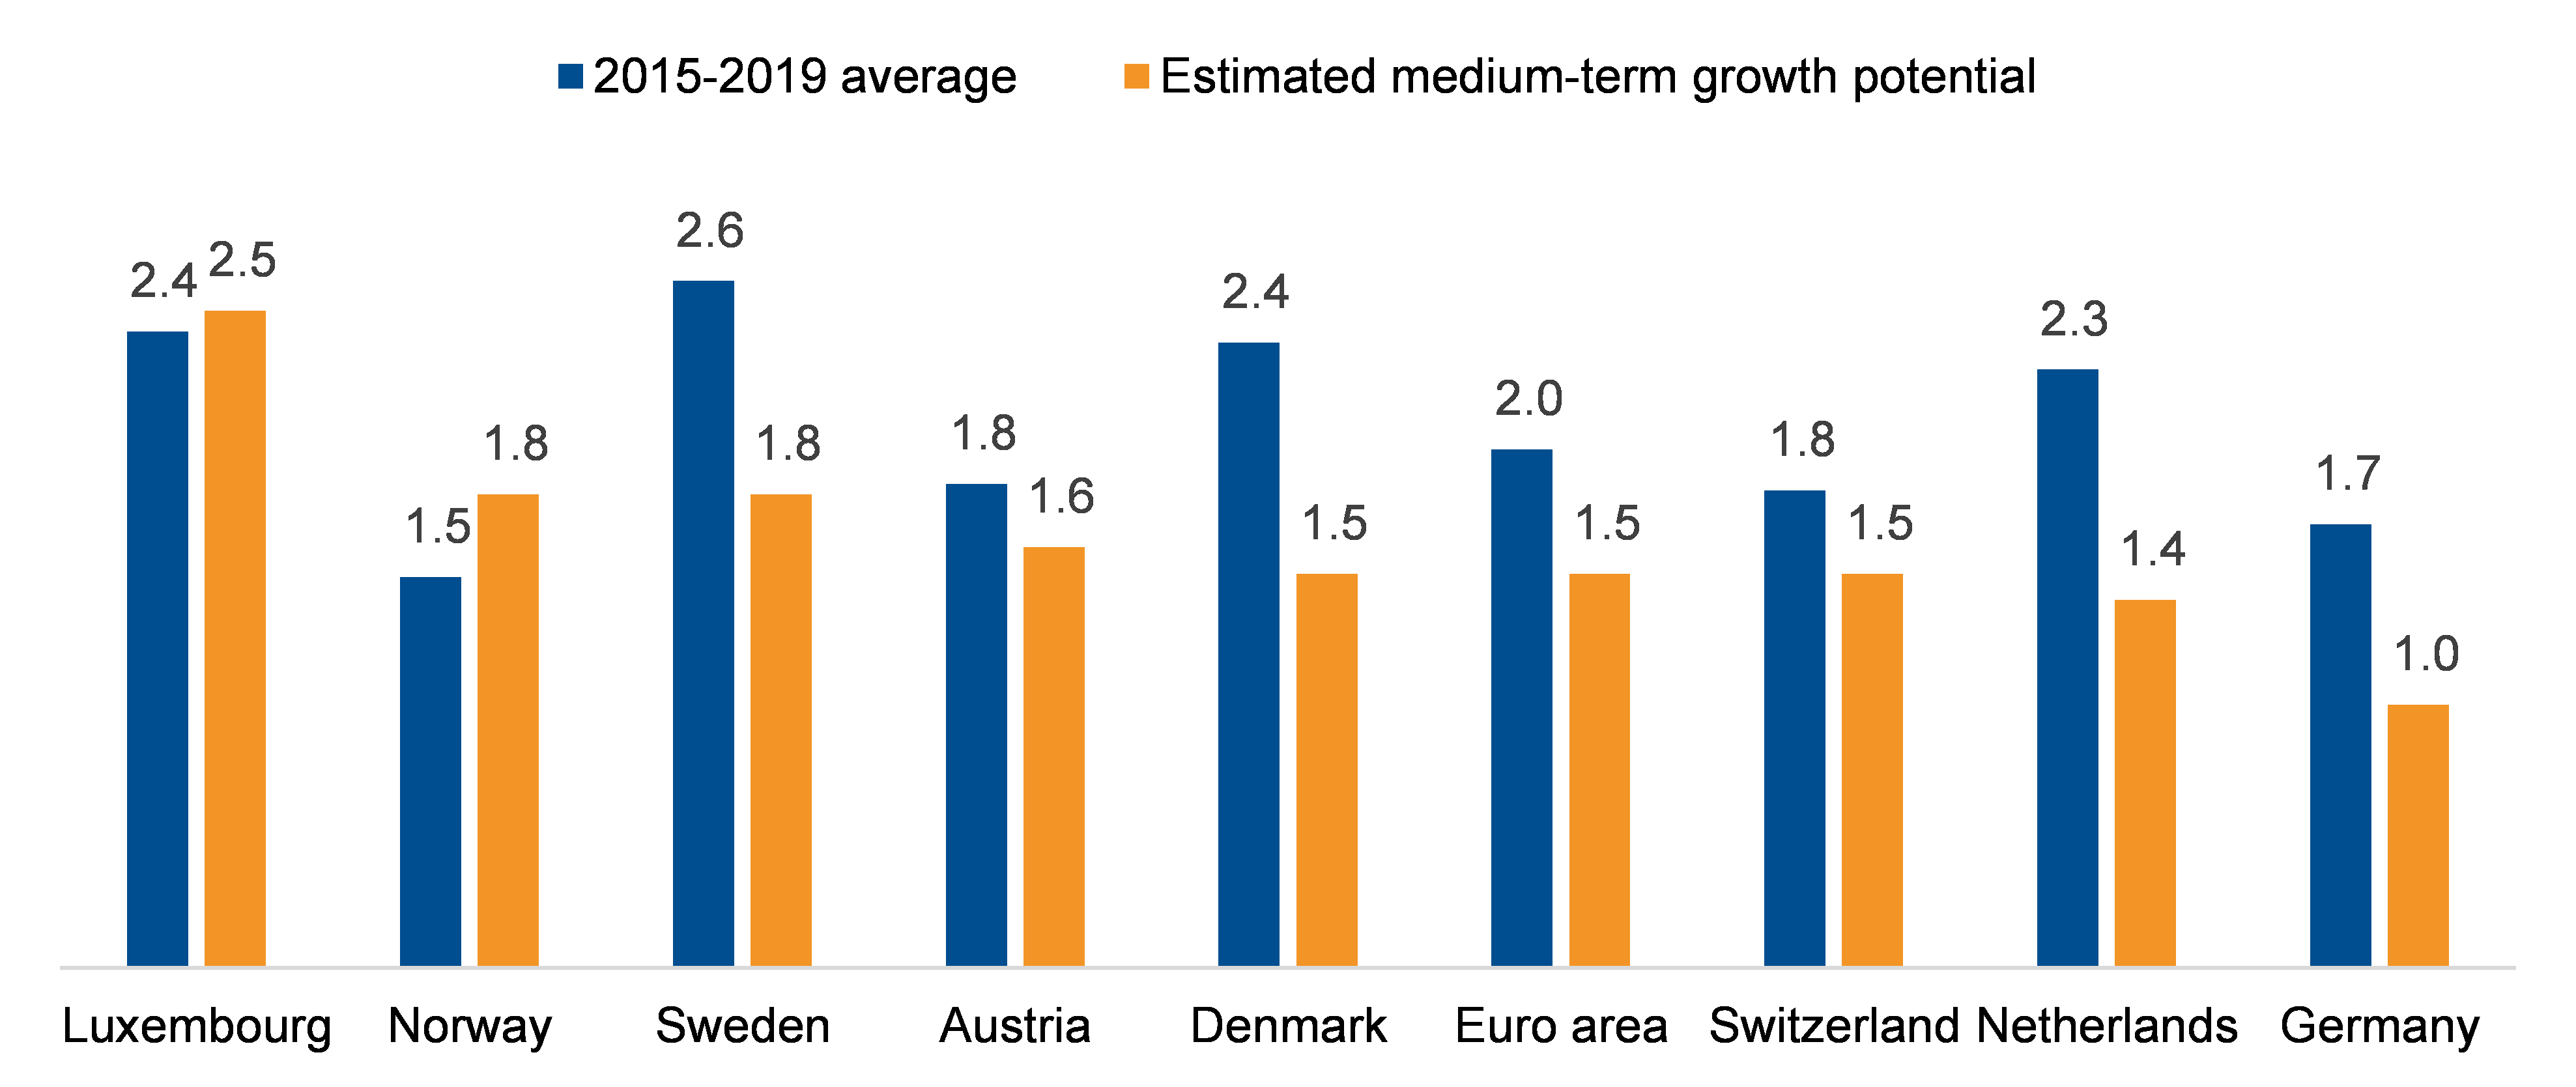 Source: Eurostat, Scope Ratings.